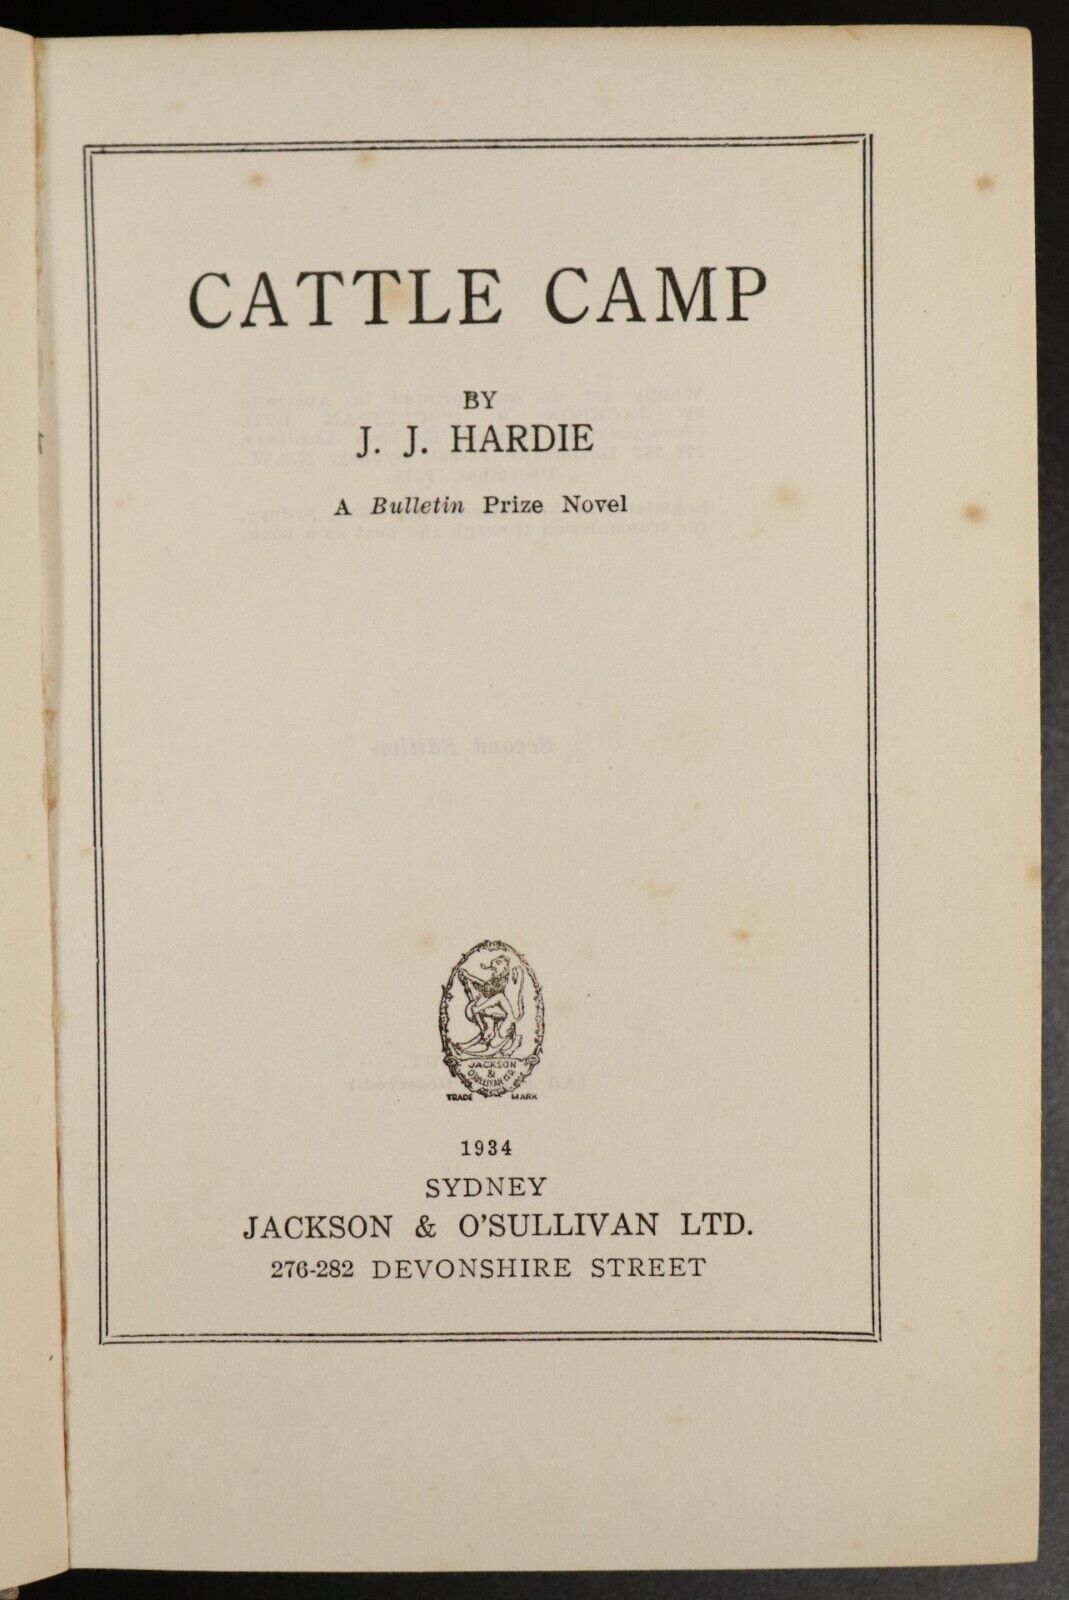 1934 Cattle Camp by J.J. Hardie Antique Australian Fiction Book Scarce - 0